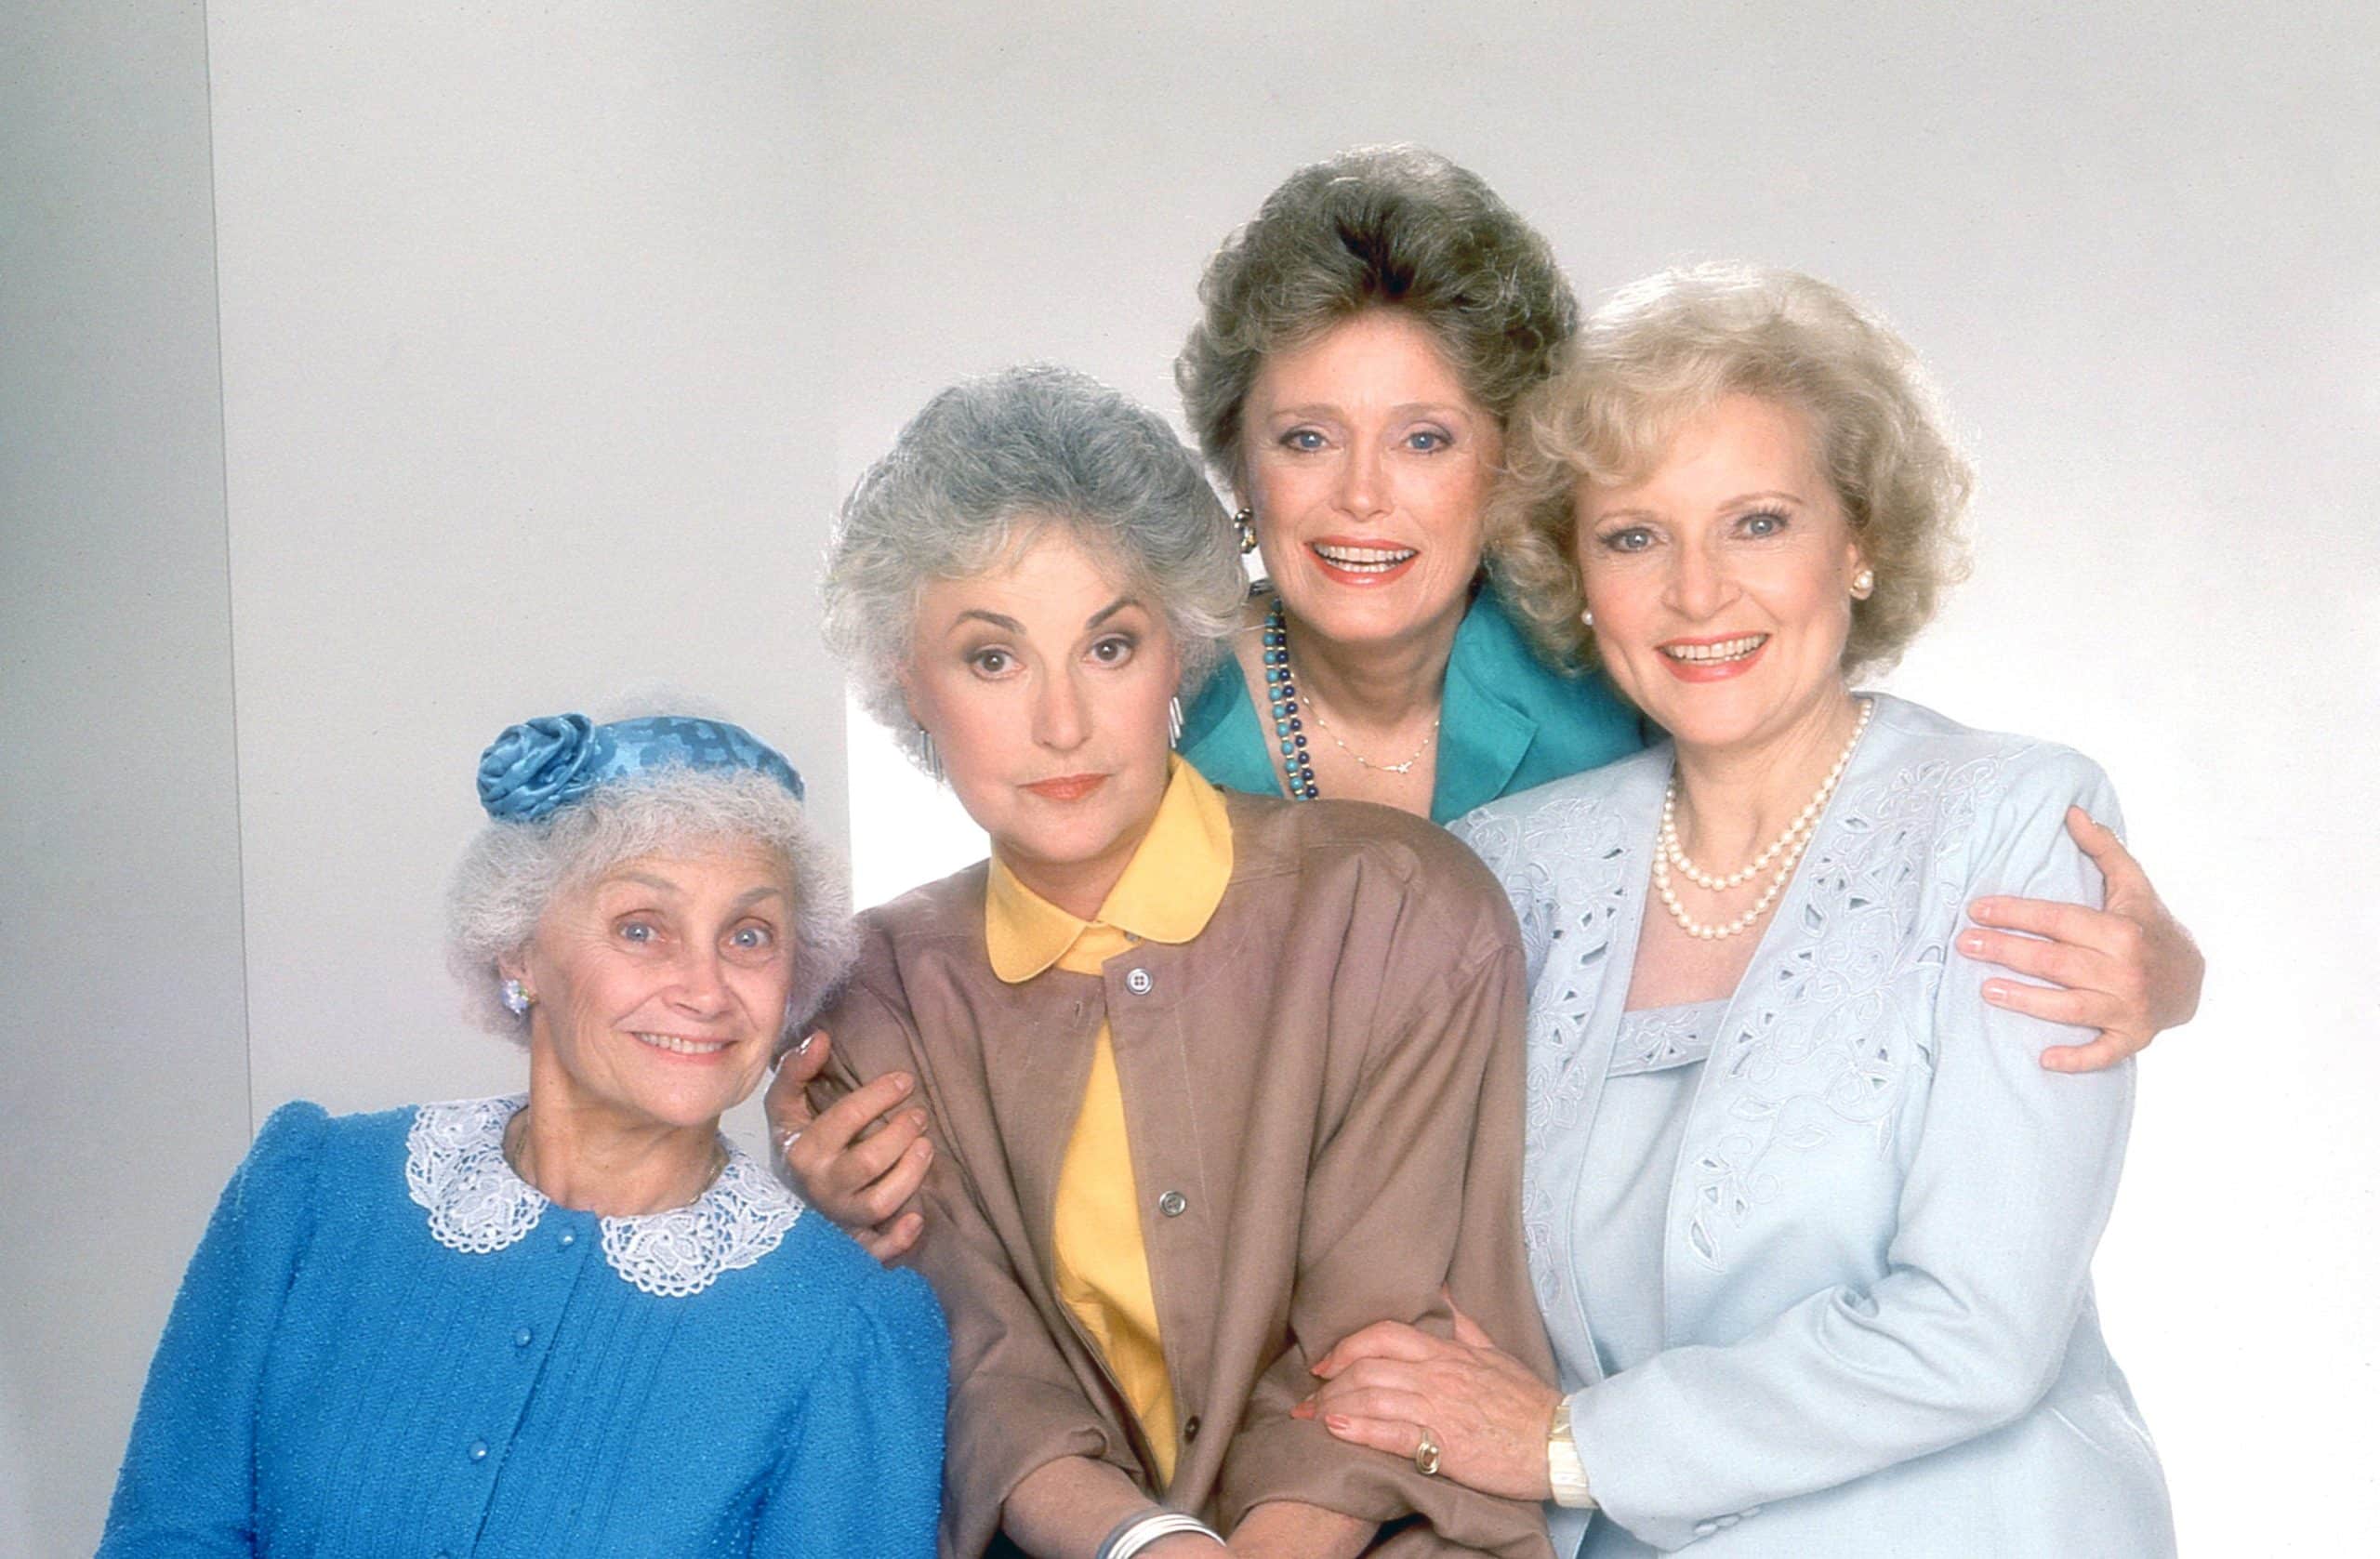 THE GOLDEN GIRLS, from left: Estelle Getty, Bea Arthur, Rue McClanahan, Betty White